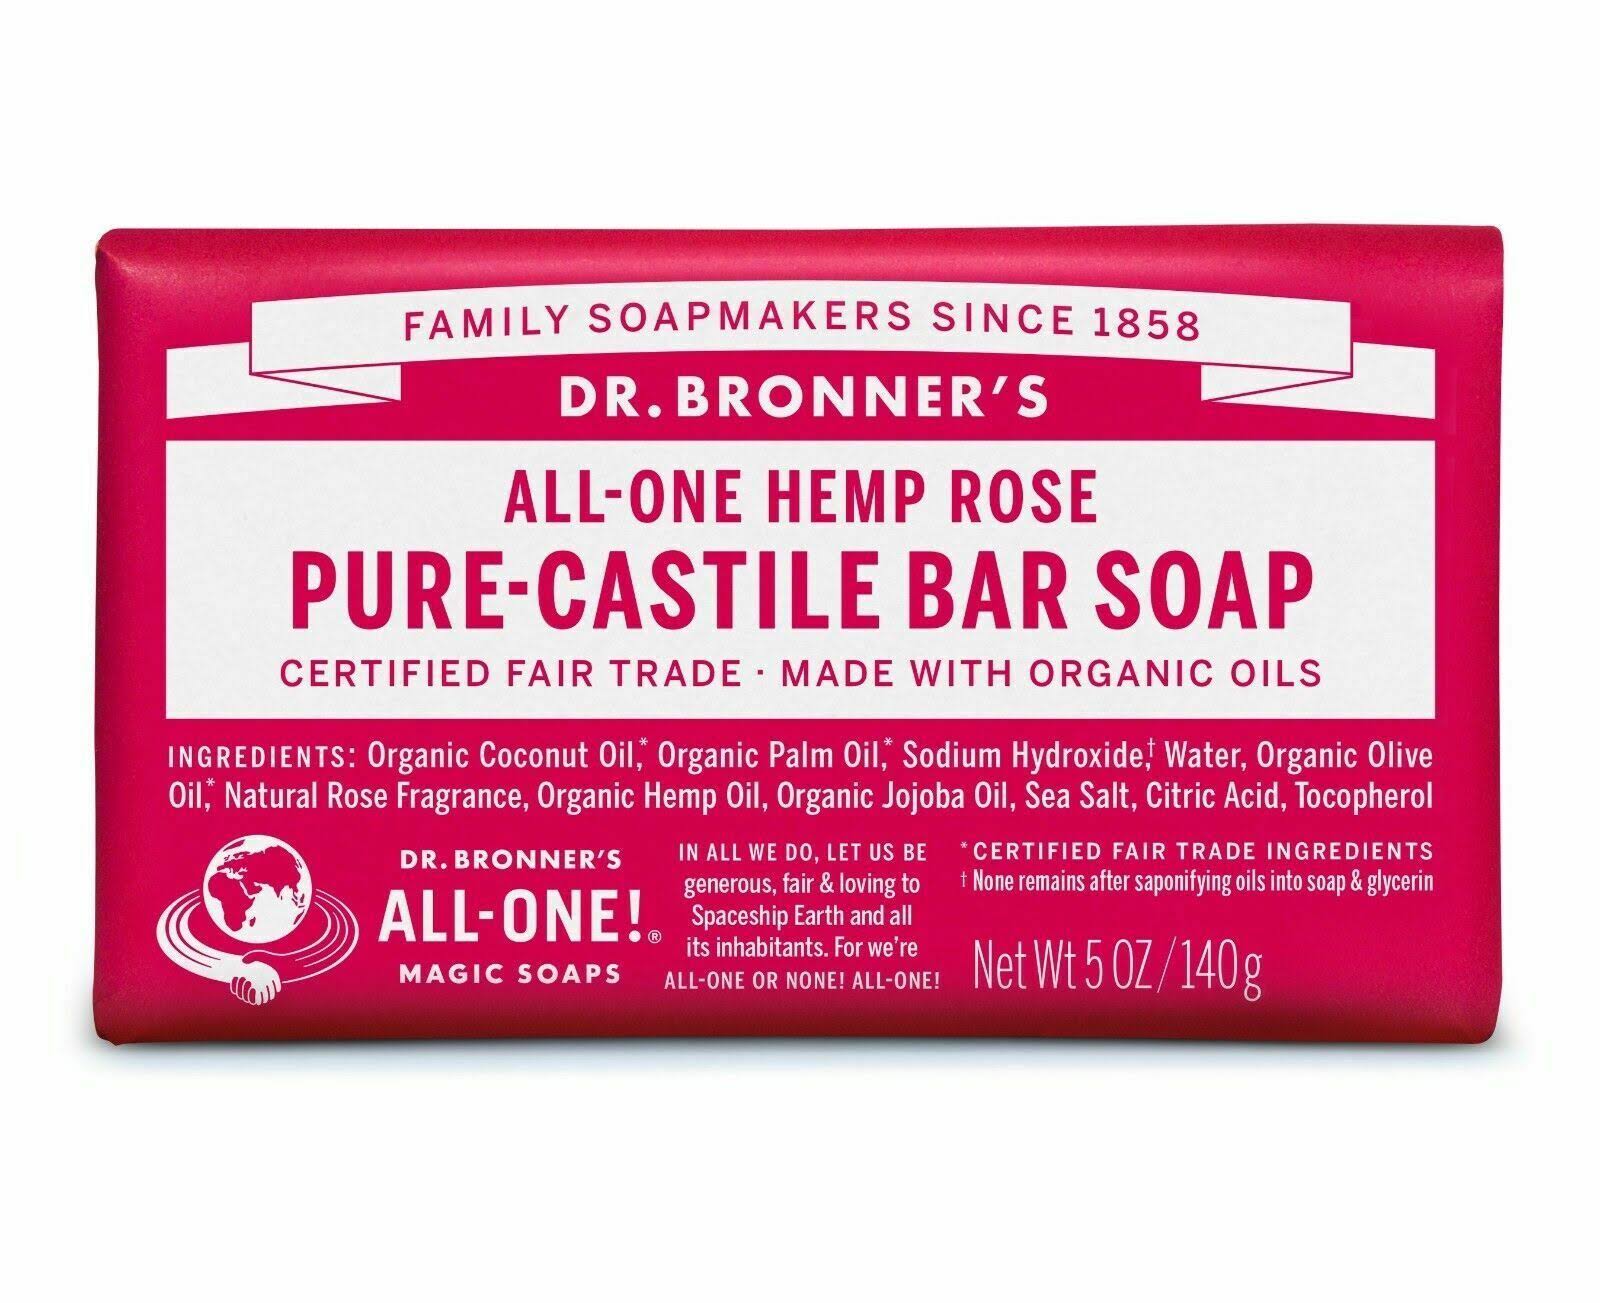 Dr. Bronner's Classic Pure-Castile Soap - Rose